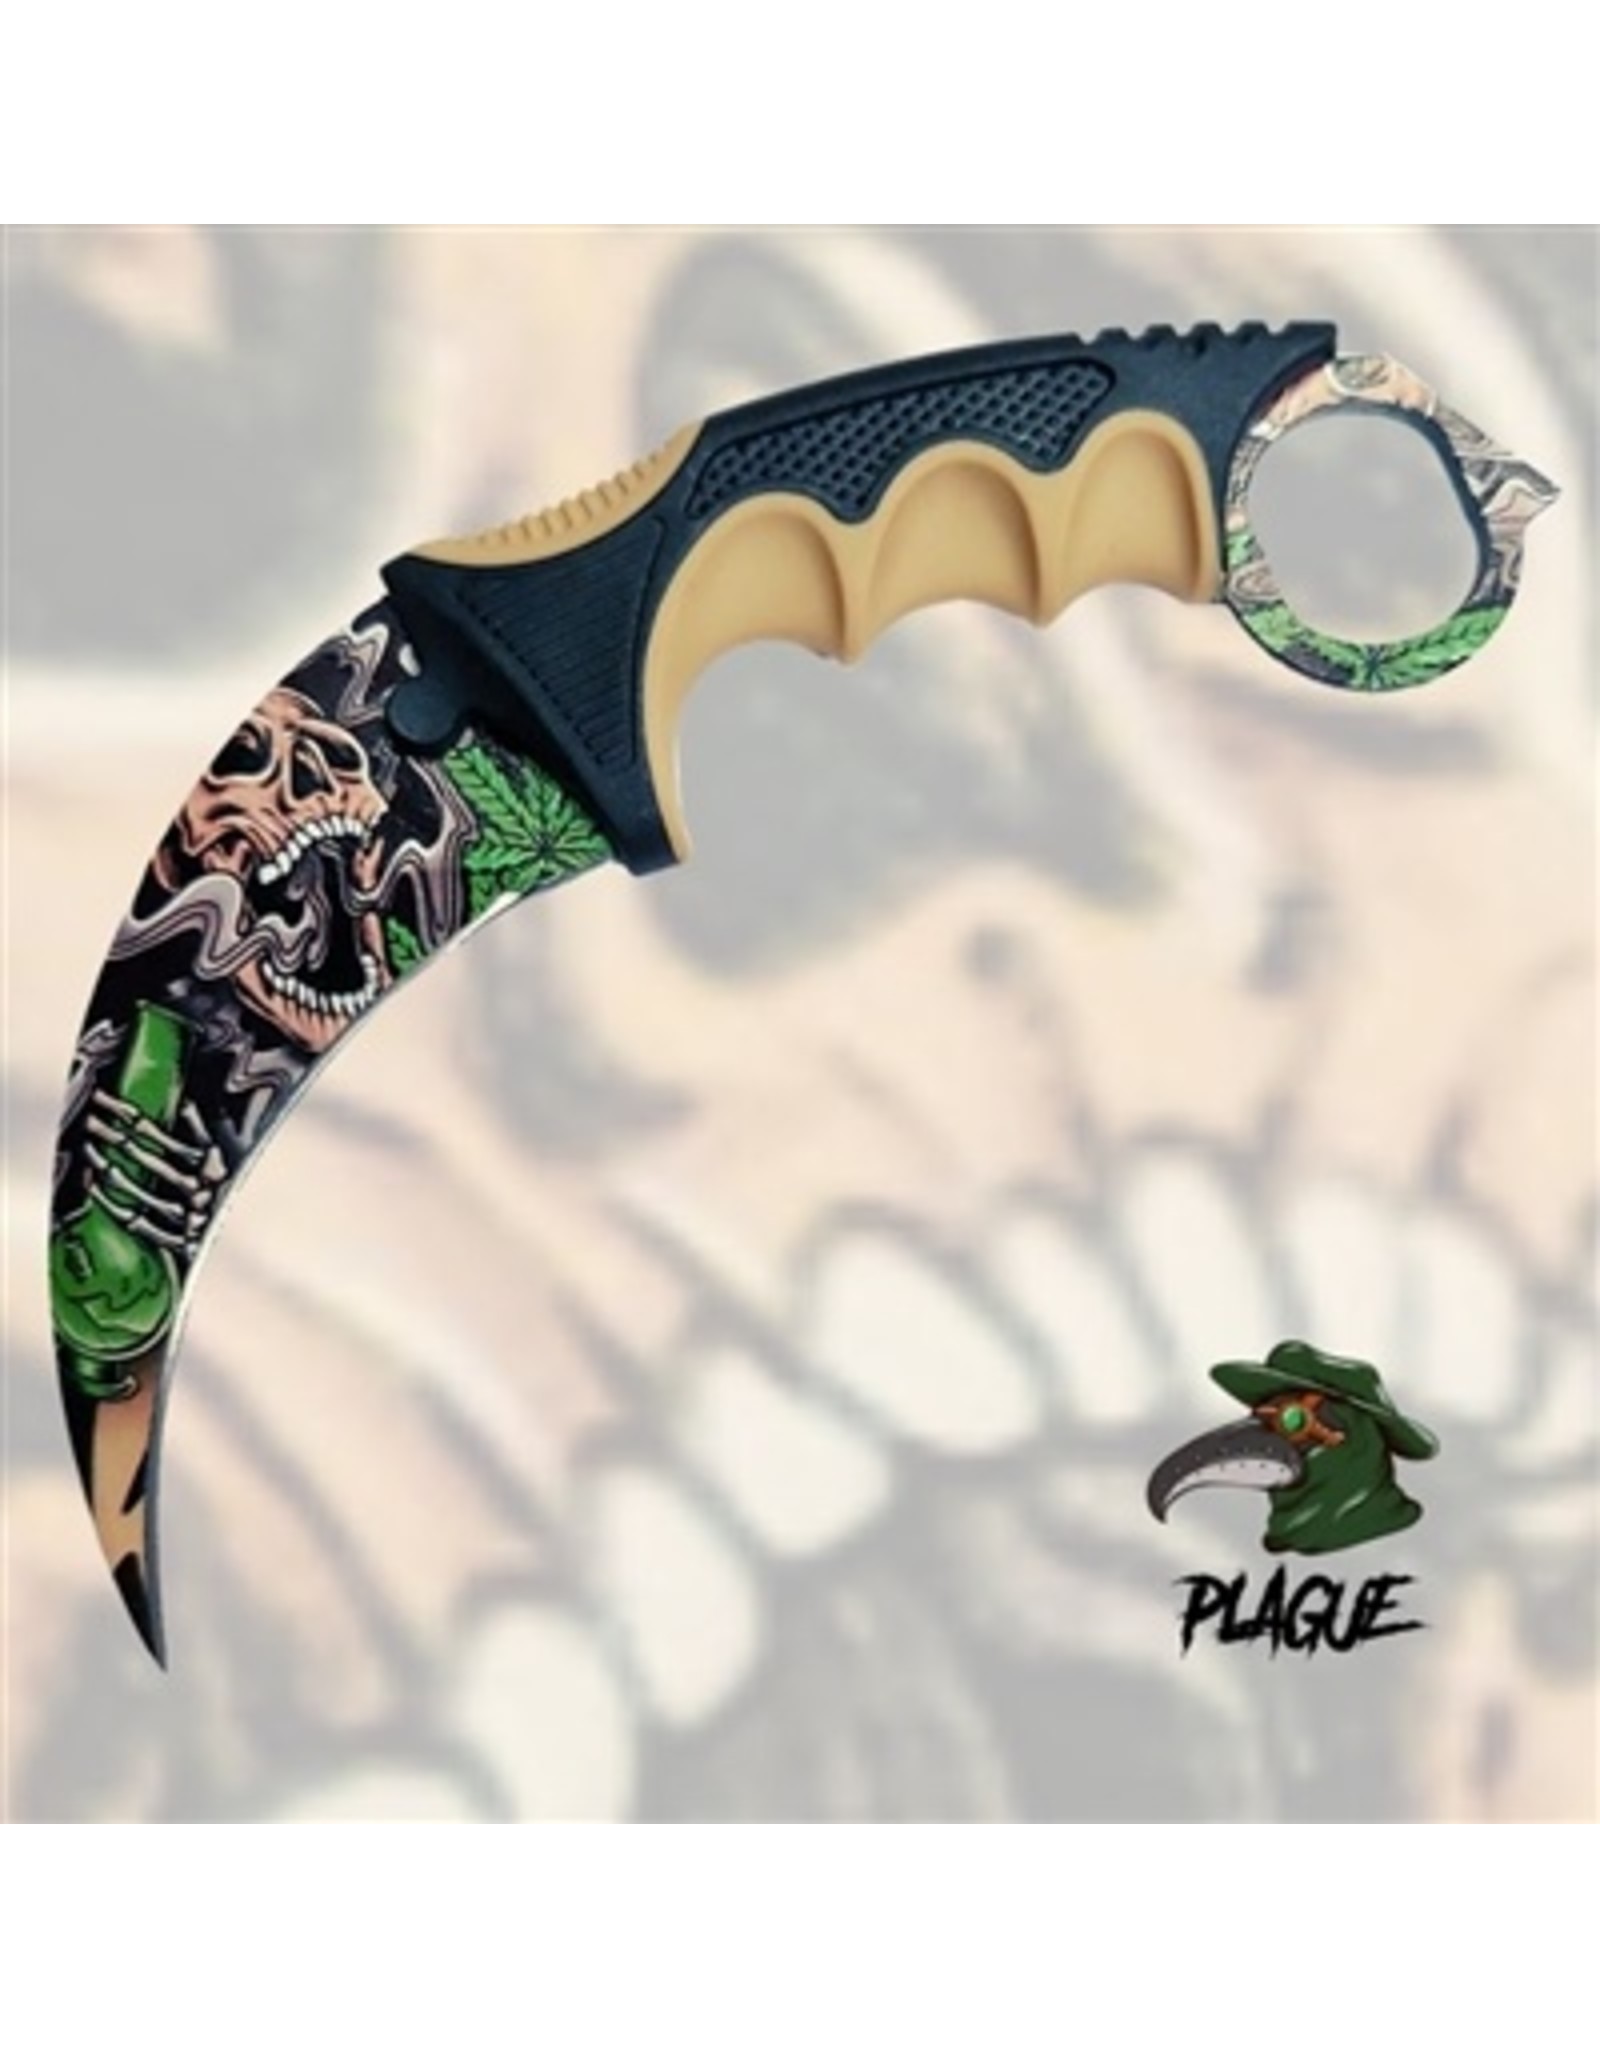 Plague Karambit Knife - Still Smokin 106 SD00175TNW